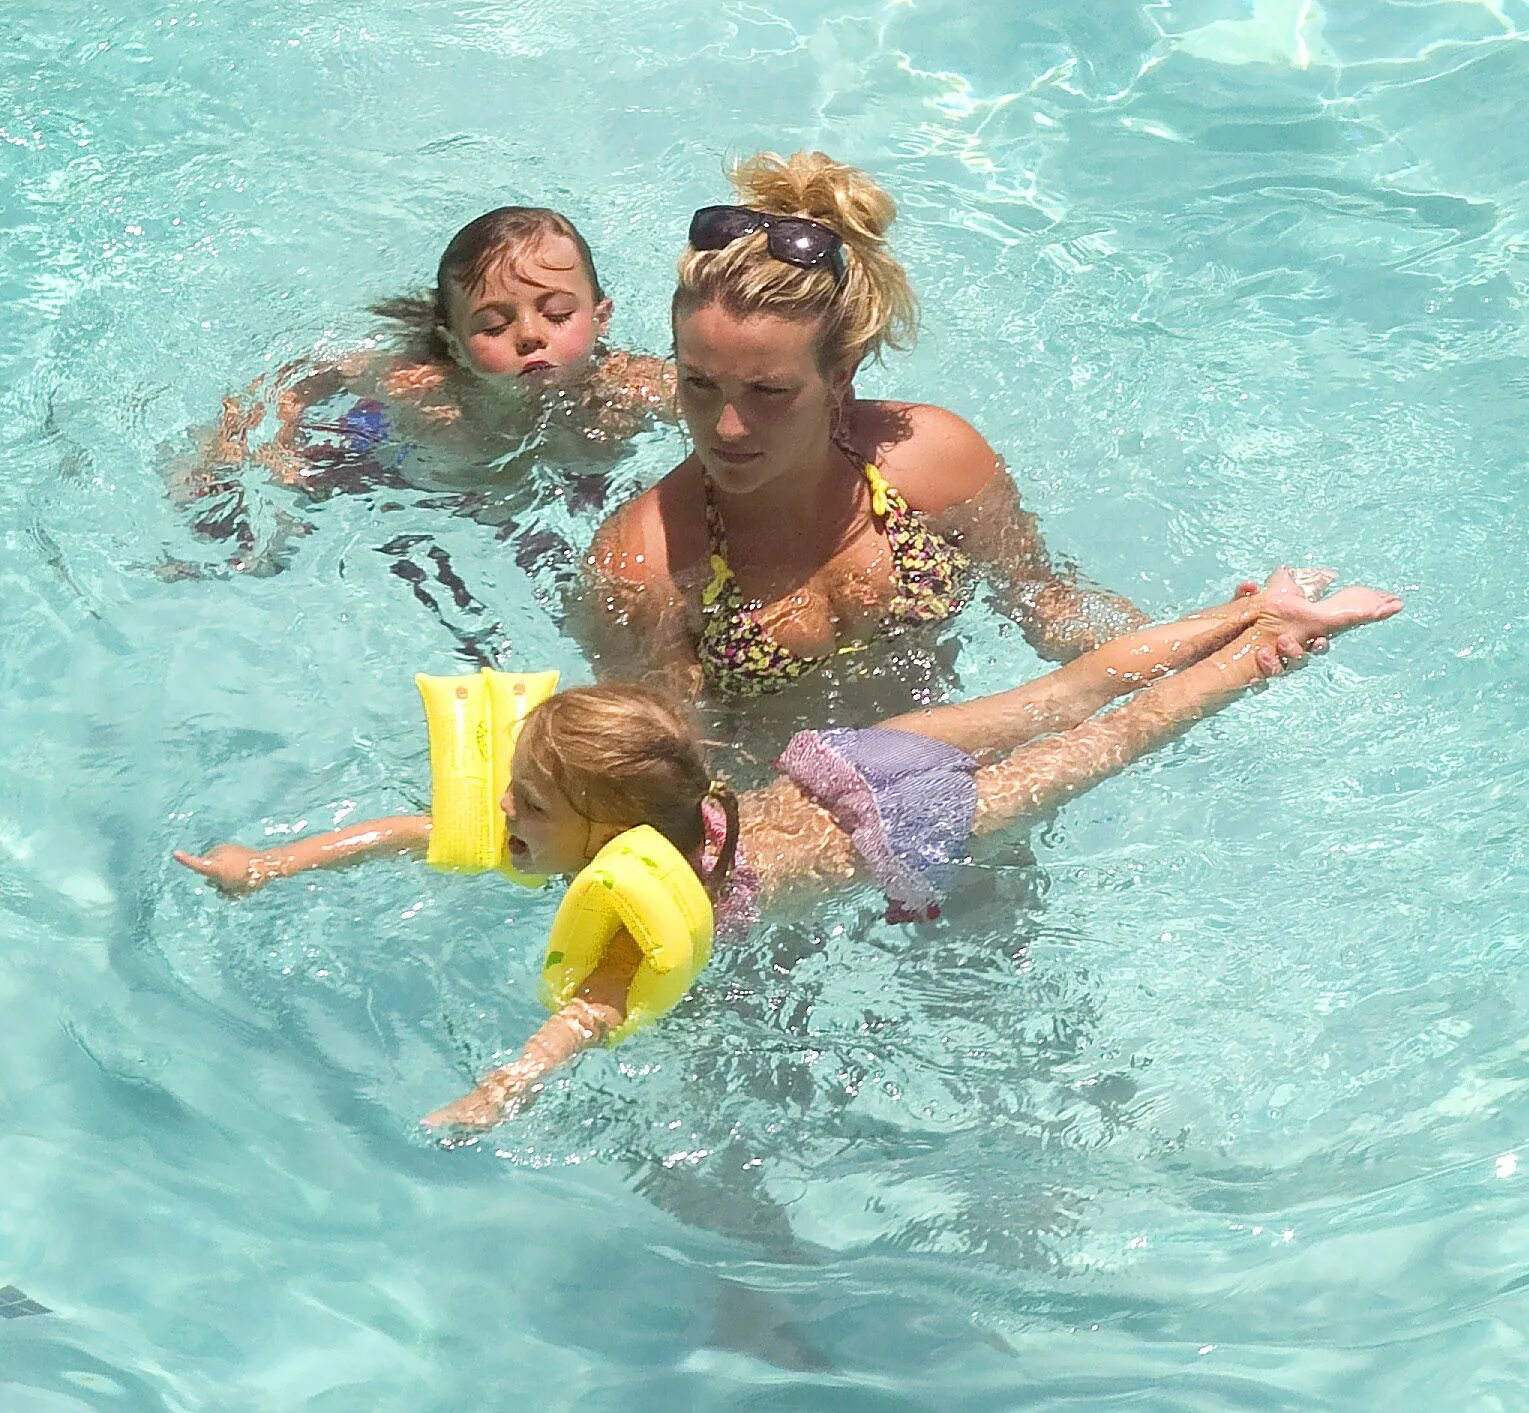 Бритни Спирс в бассейне. Бритни Спирс с детьми в бассейне. Бритни в бассейне. Мать и сестра Бритни Спирс. My sister swimming